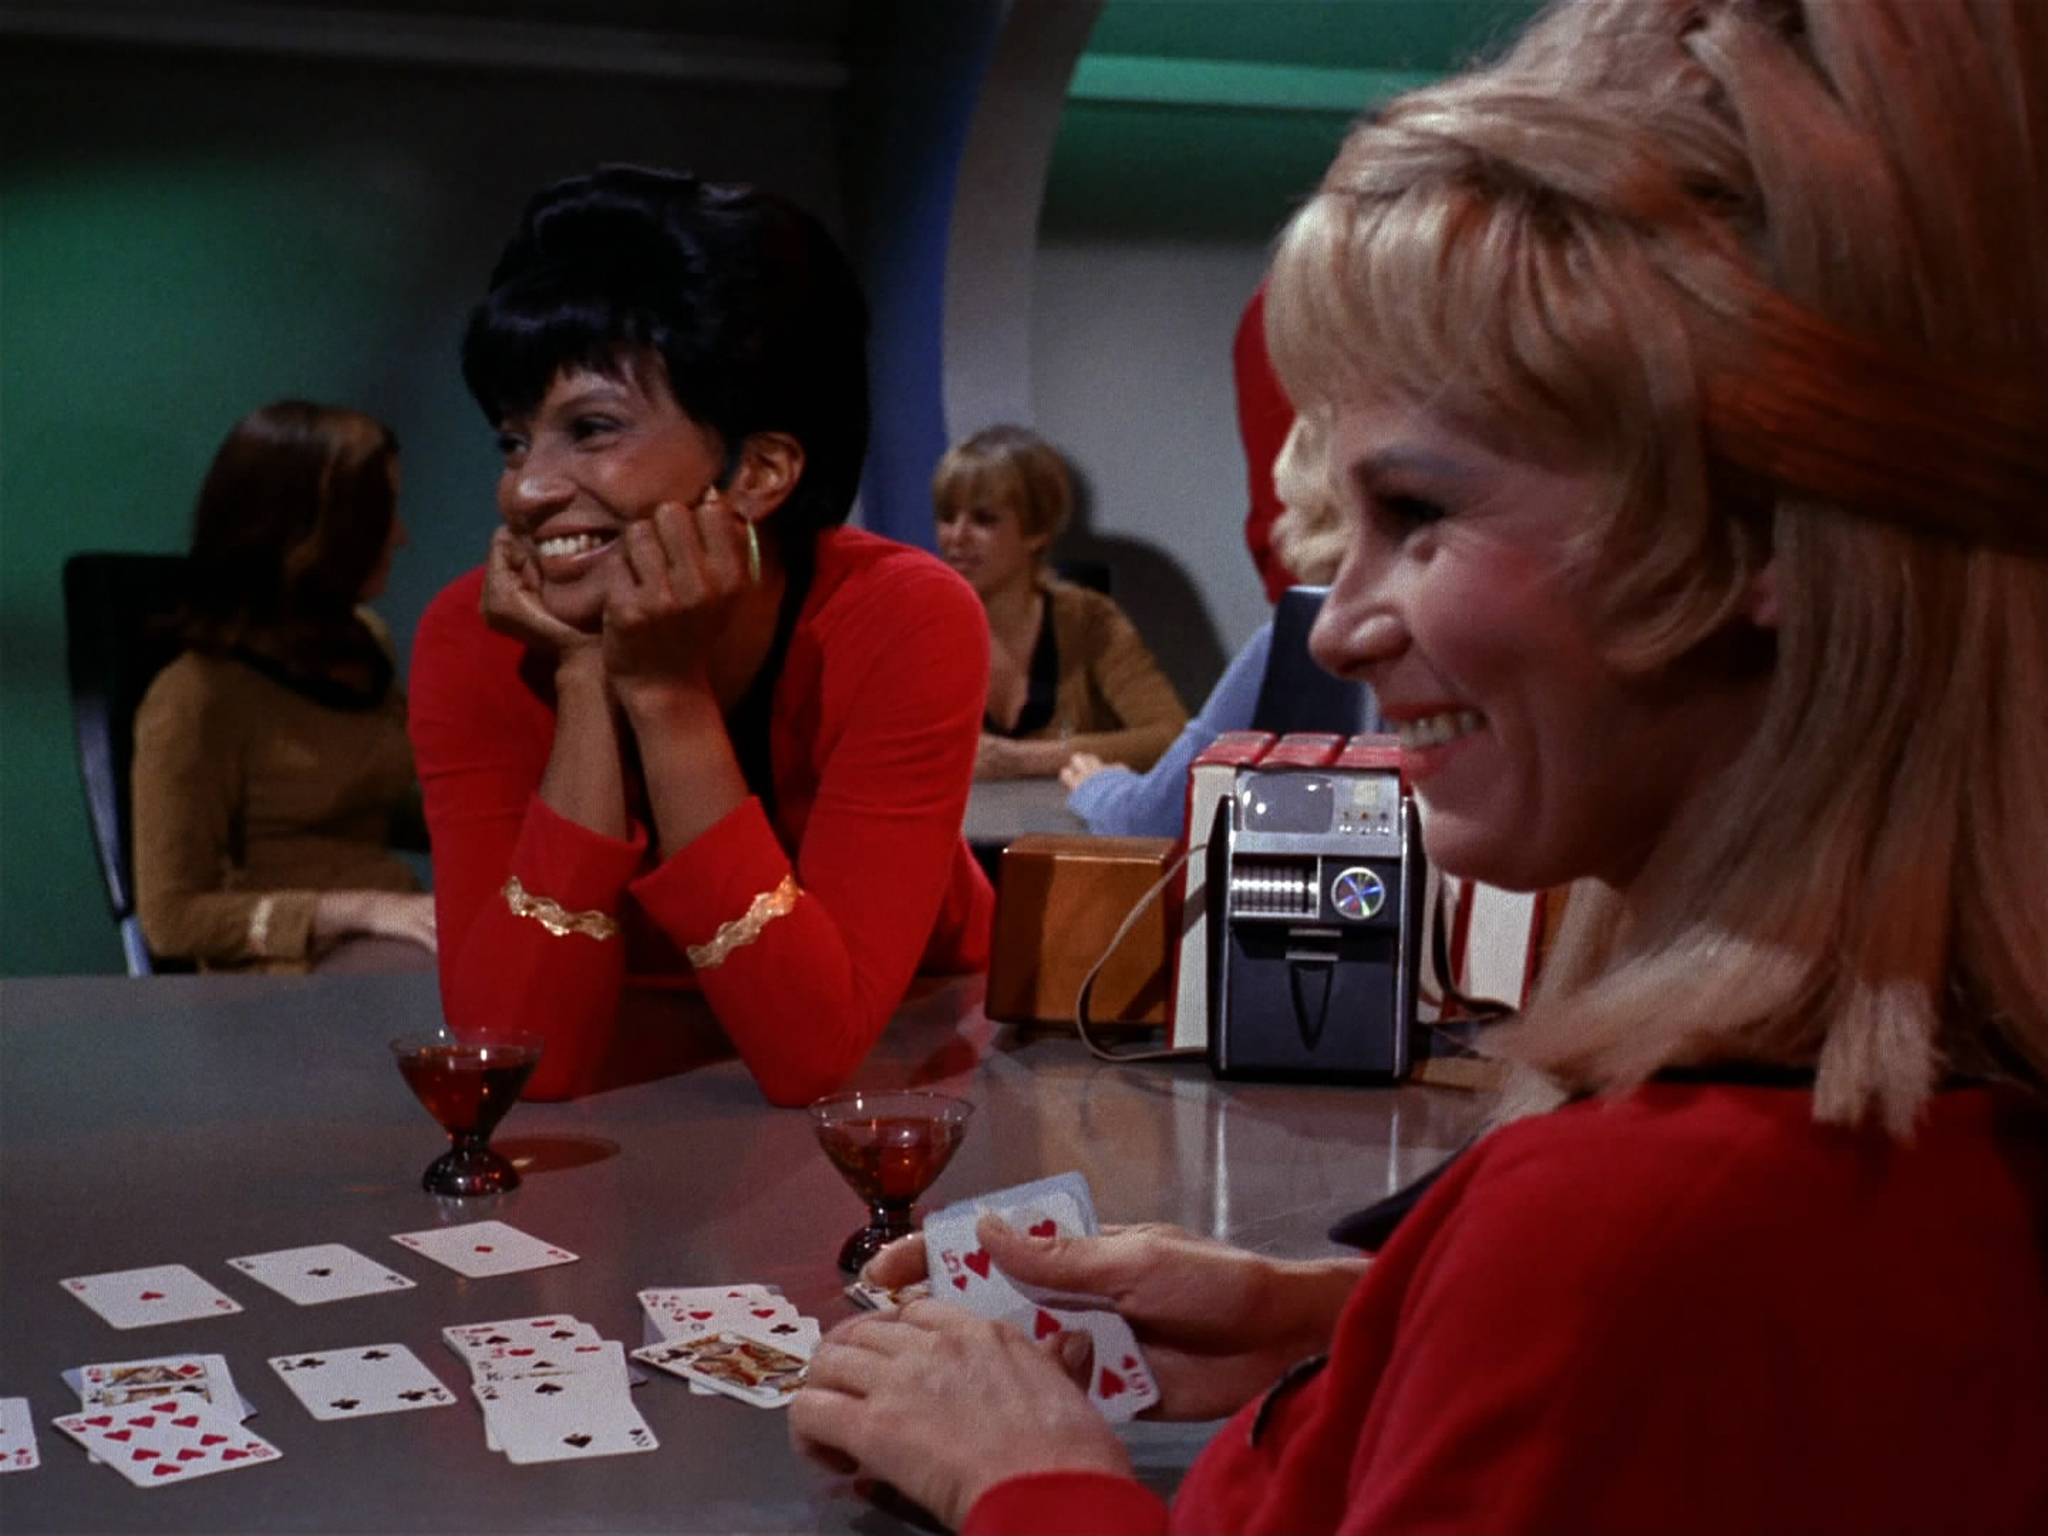 Still of Nichelle Nichols and Grace Lee Whitney in Star Trek (1966)